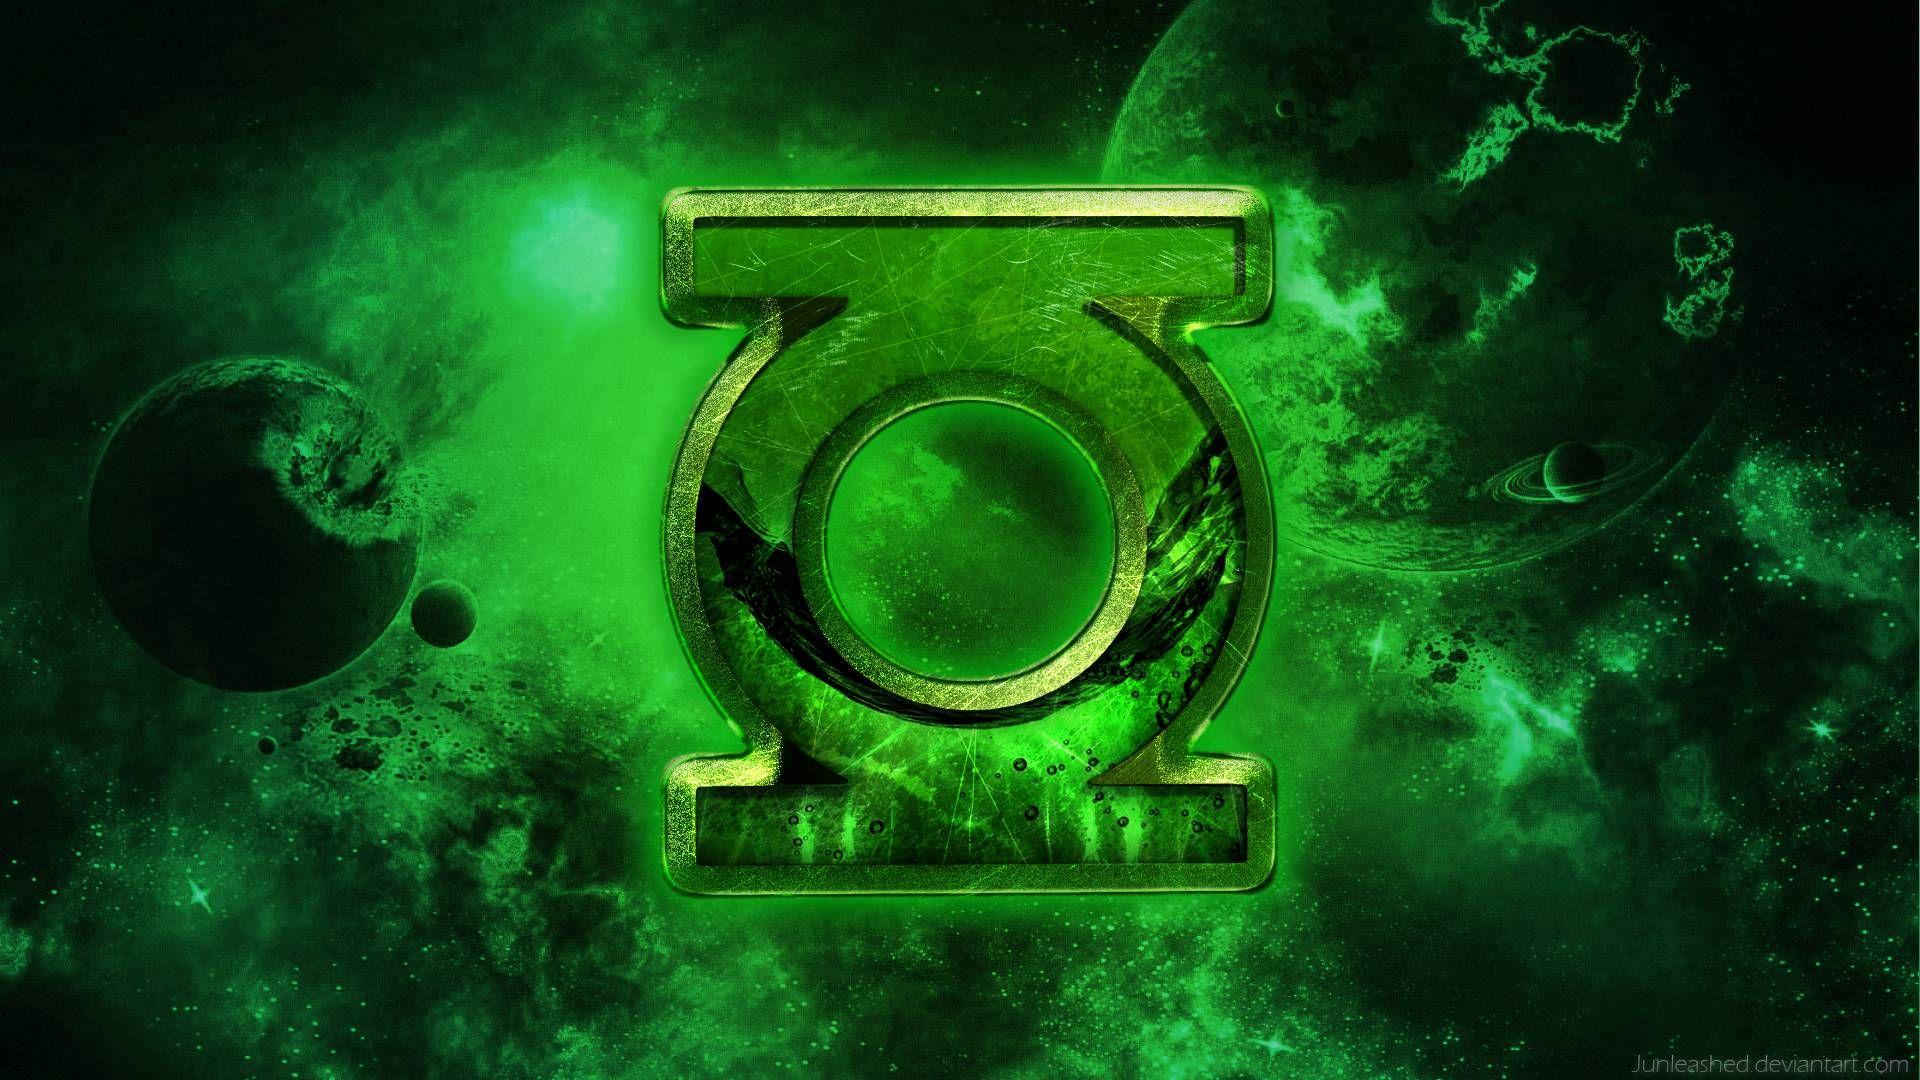 Amazing Green Lantern HD Wallpaper.VM. Green lantern wallpaper, Green lantern corps, Green lantern symbol